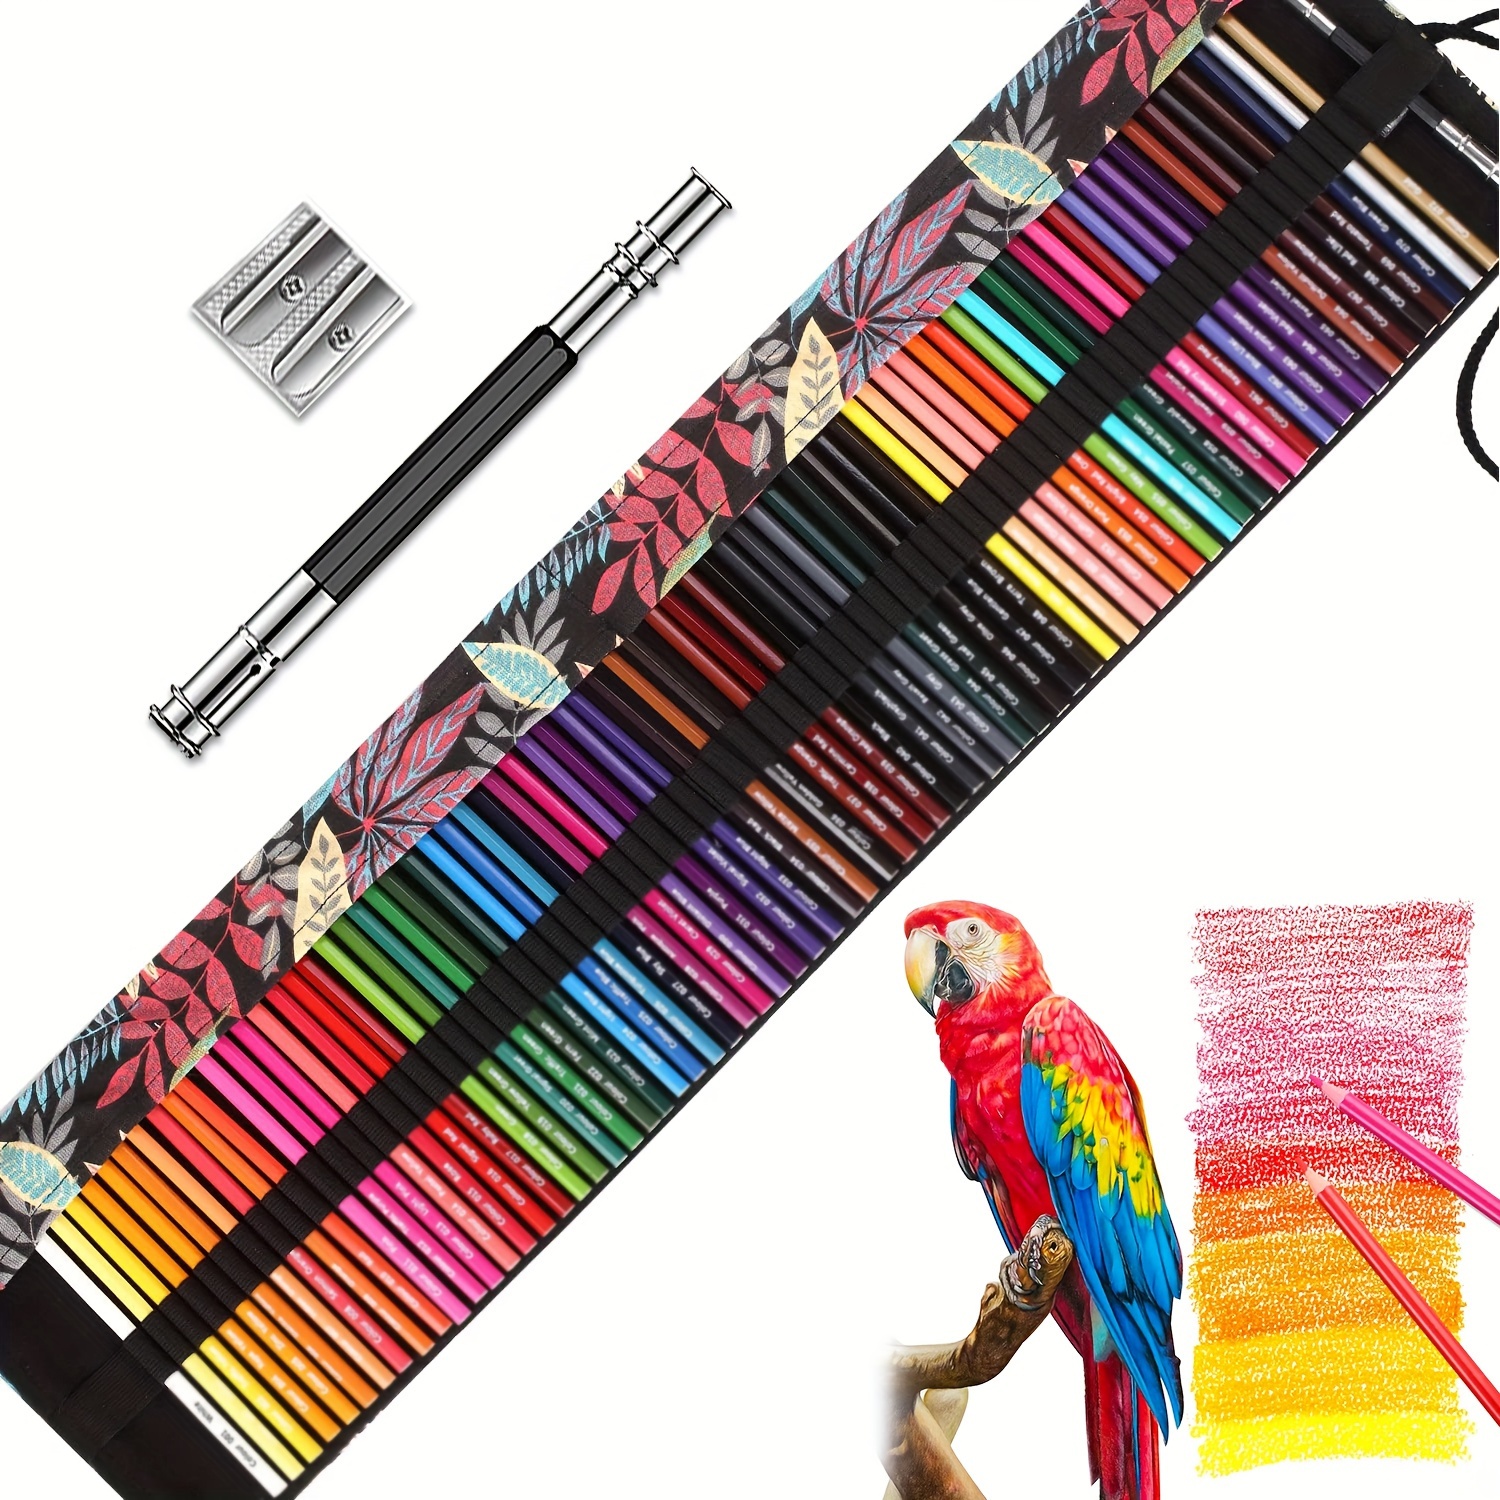  Prismacolor 150 lápices de colores, kit de arte para artistas,  minas de núcleo suave de madera : Arte y Manualidades